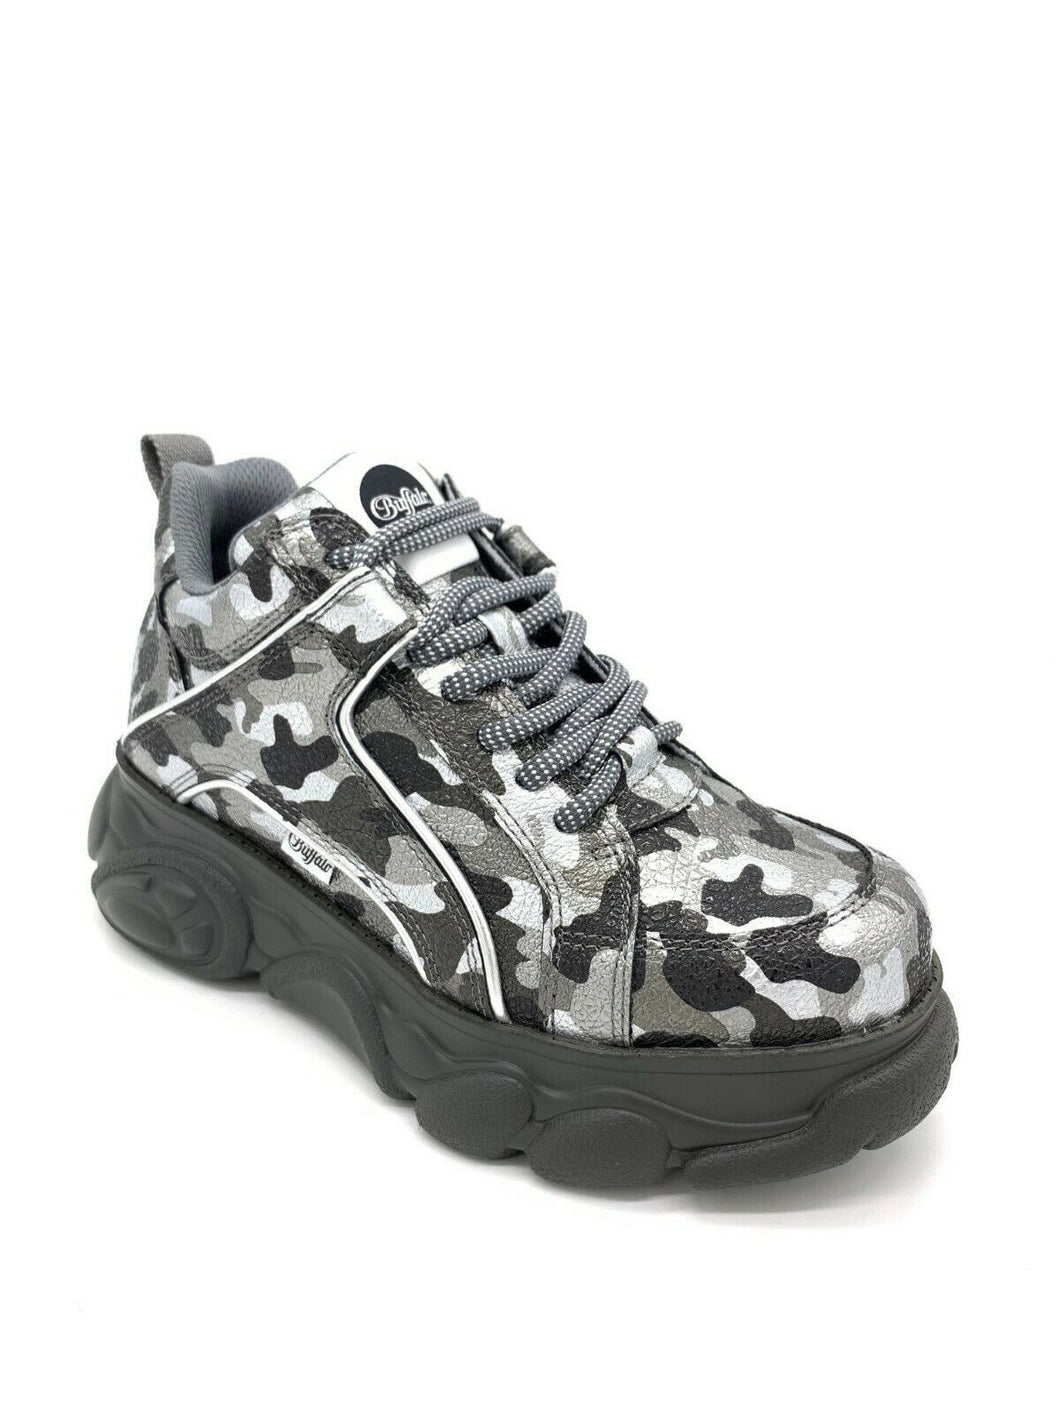 Buffalo Boots Shoes Sneaker Plateau Schuhe 90er Camouflage Military Design